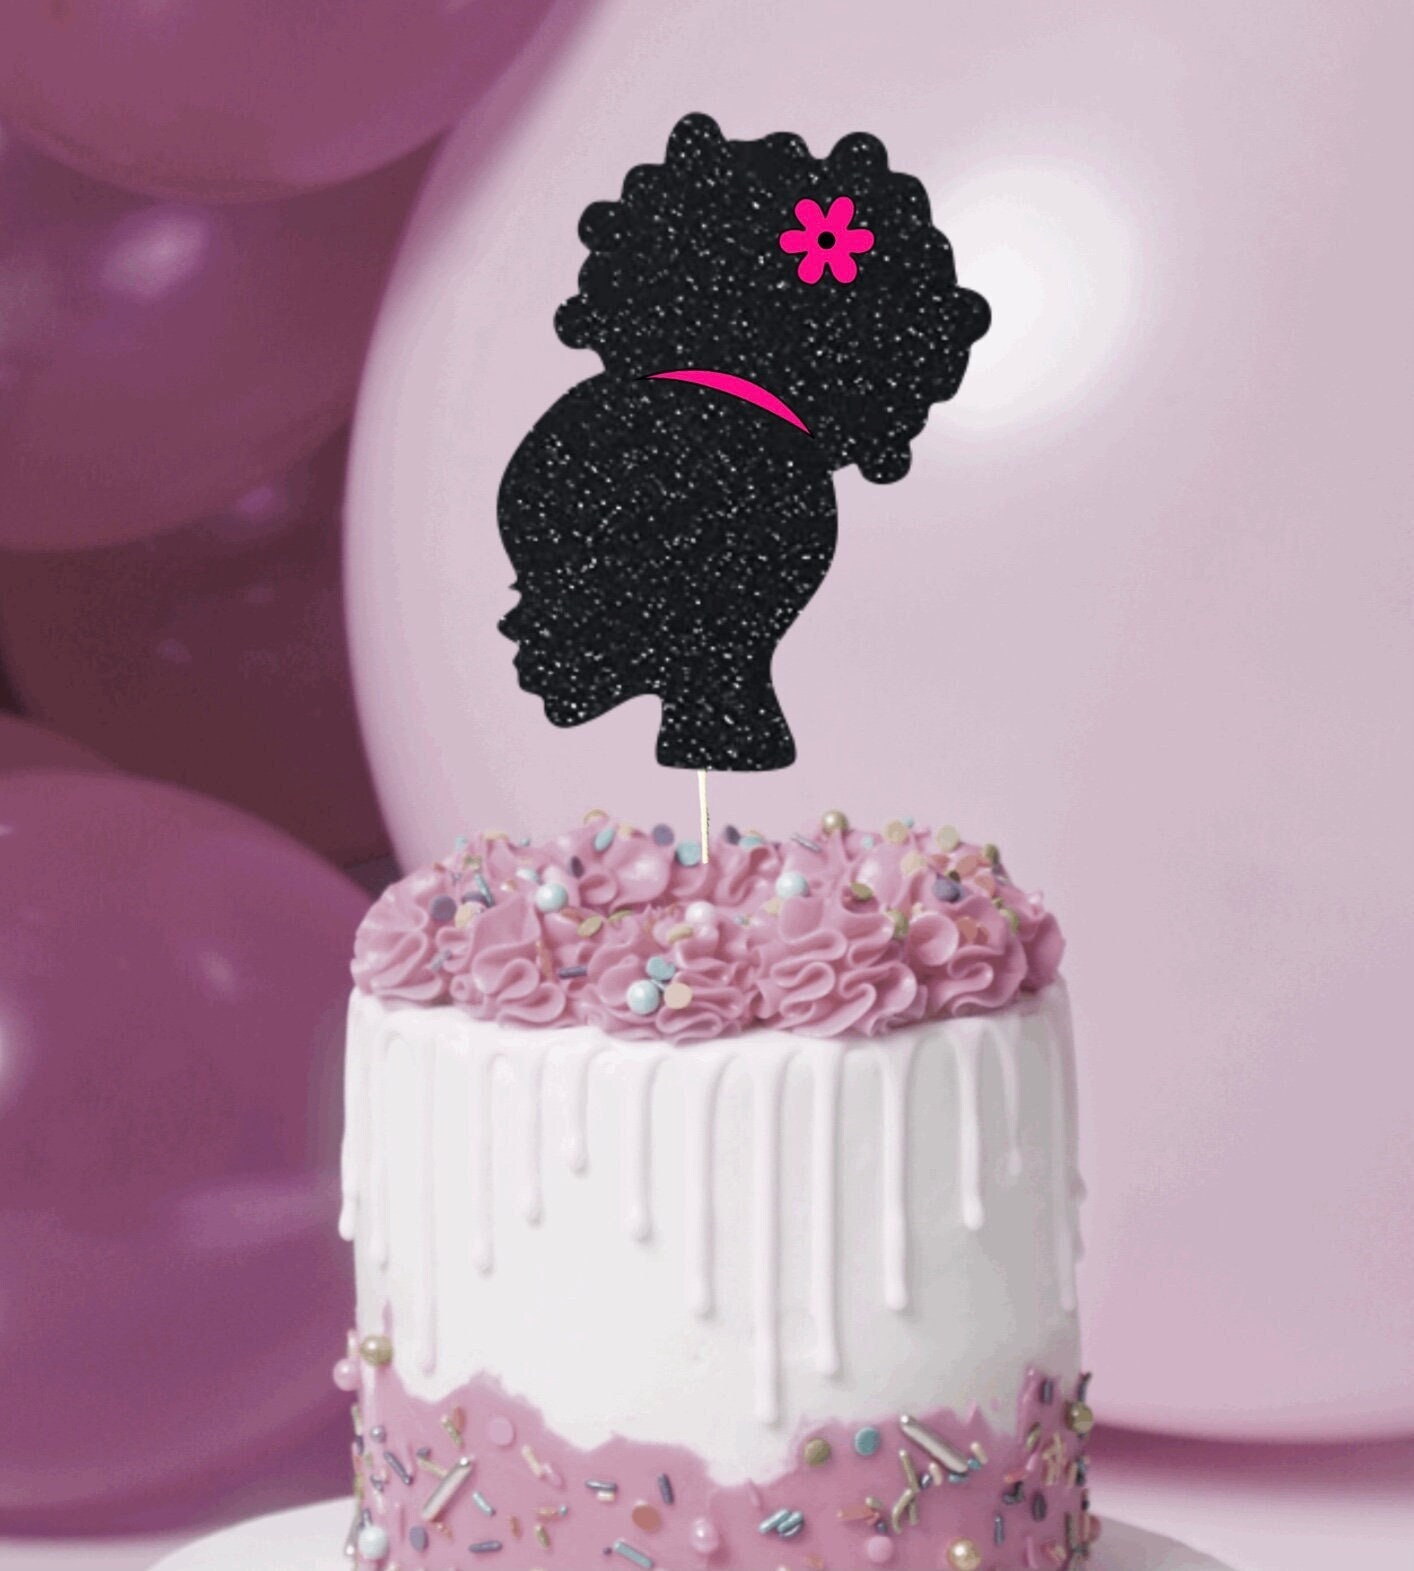 Barbie Cake! 💁🏼‍♀️🩷👛 #barbie #cake #birthday #girly #miami  #birthdaycakes #ken #doll #cakes